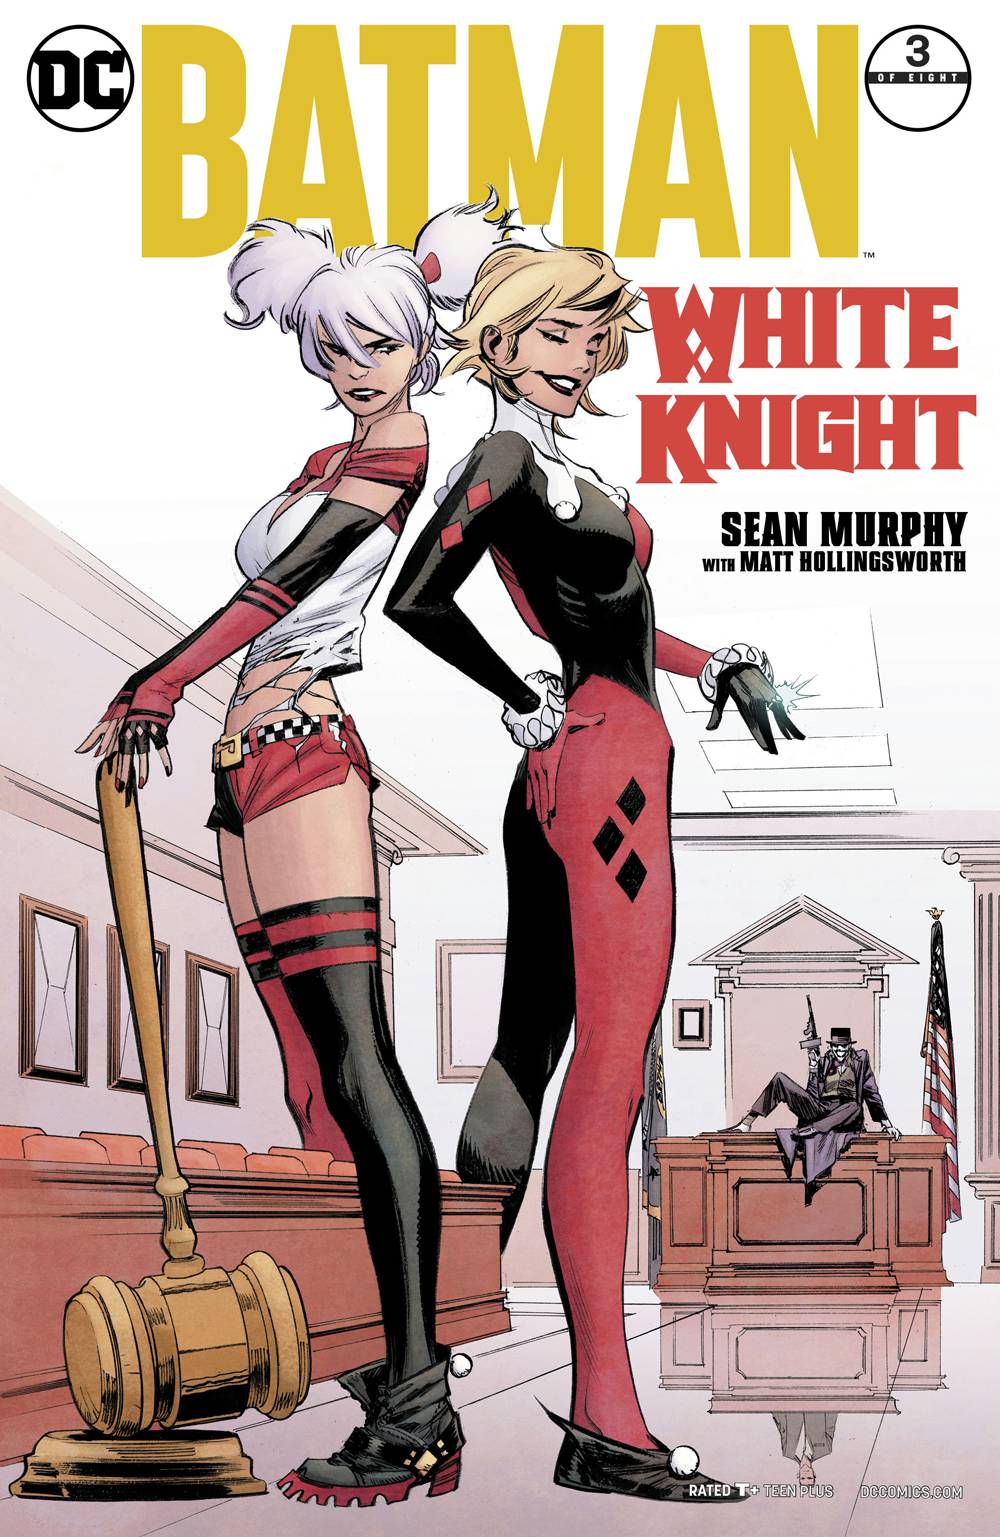 Batman White Knight #3 (of 8) Sean Murphy Cover B